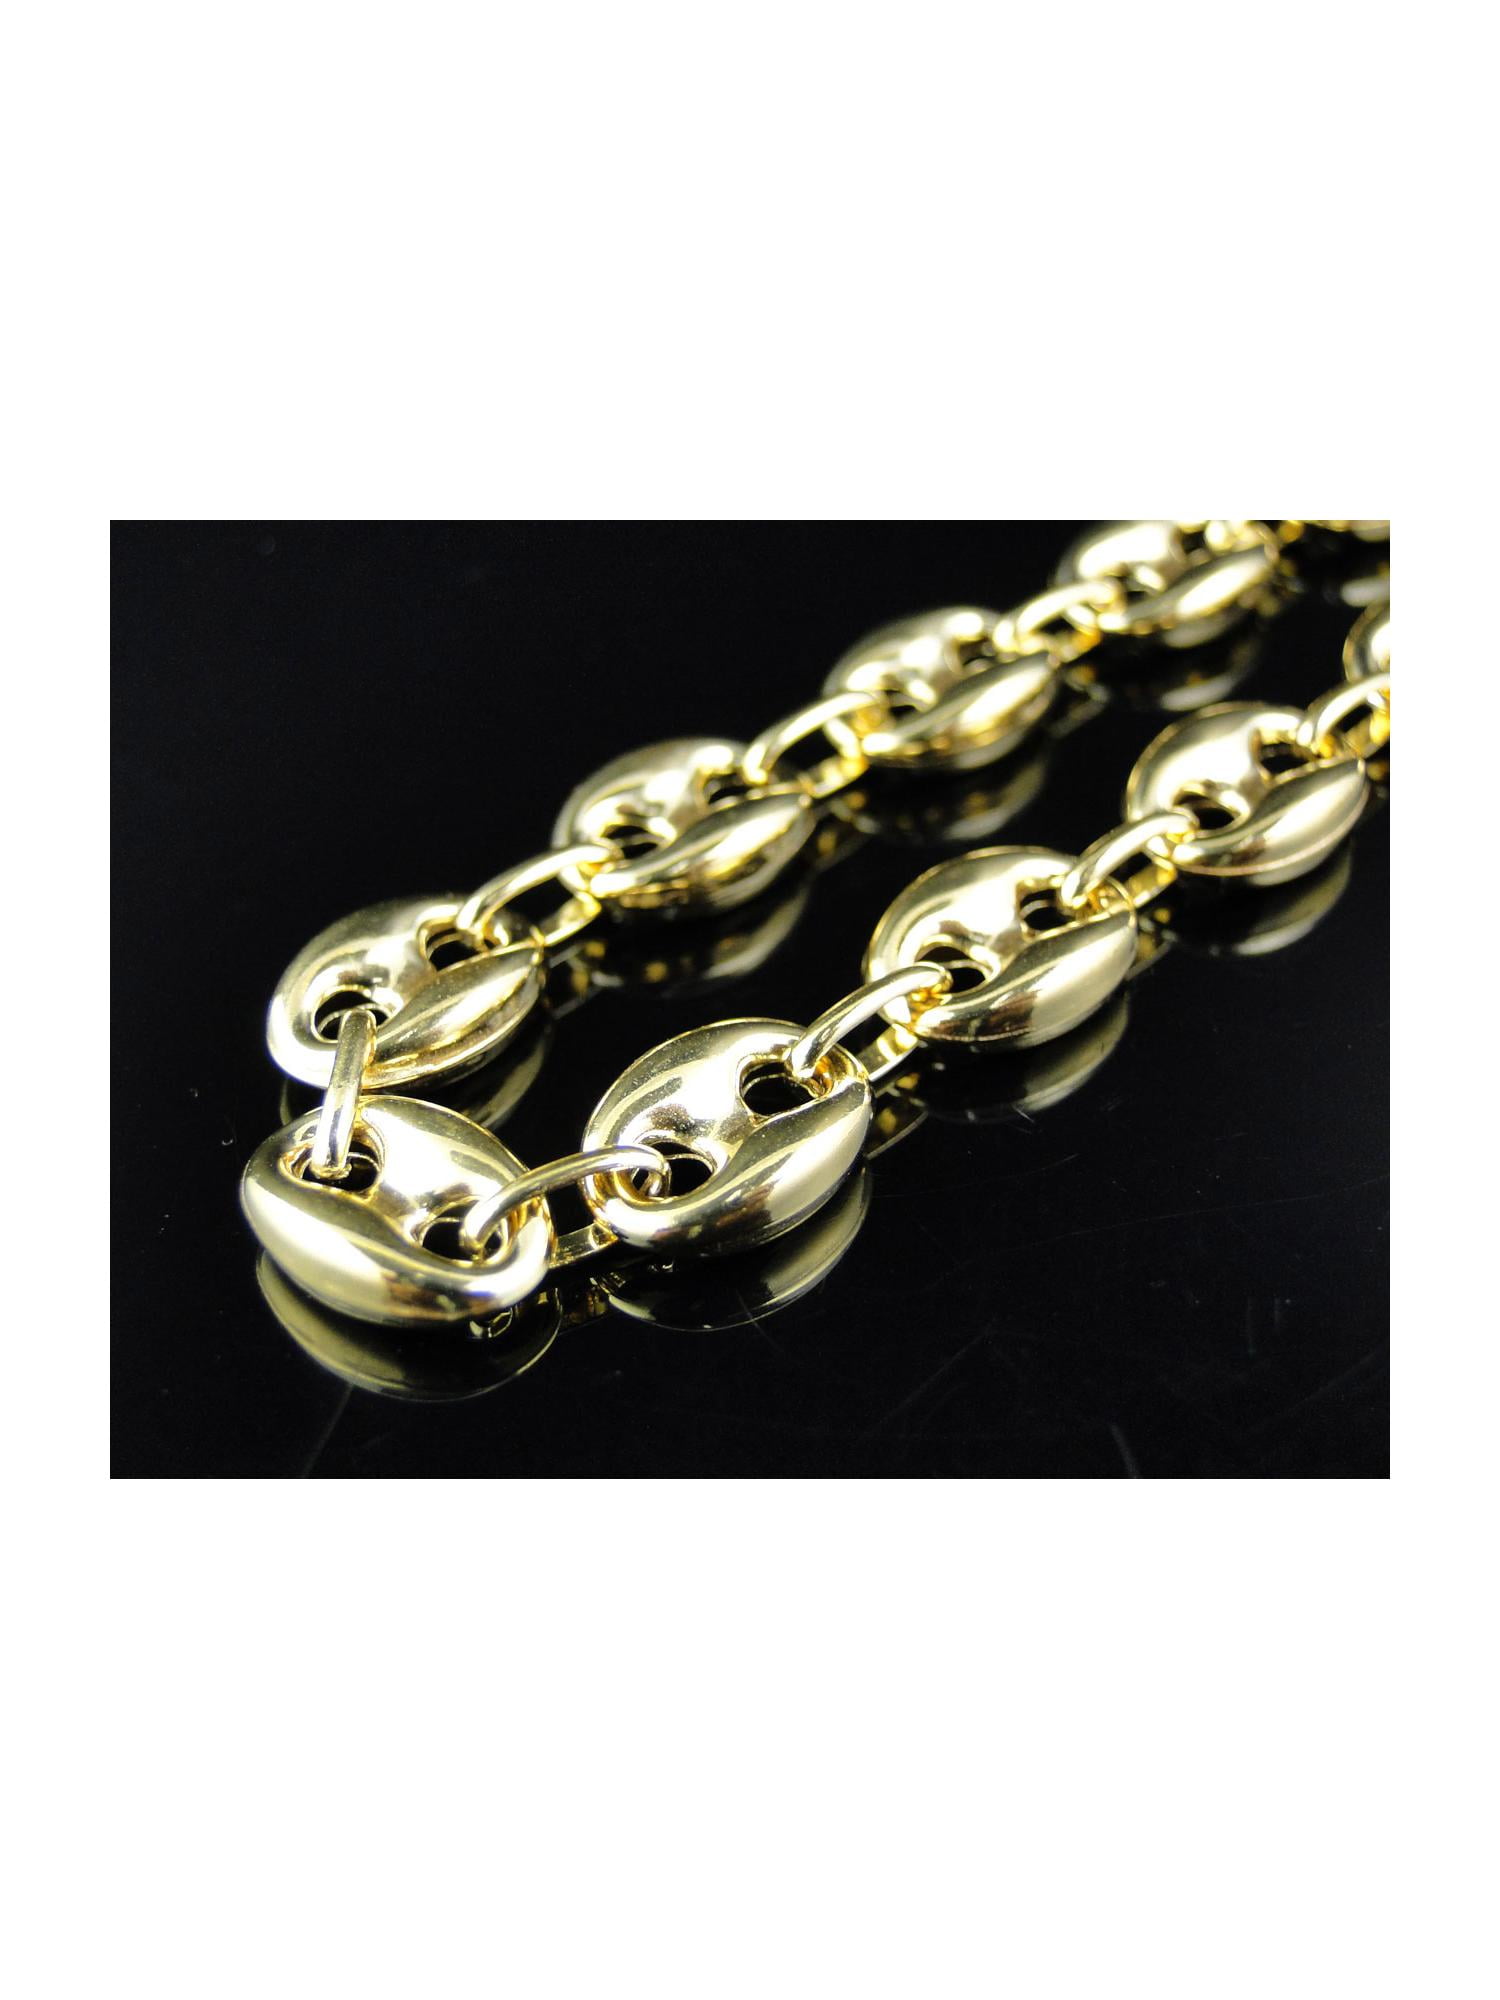 gucci style chain